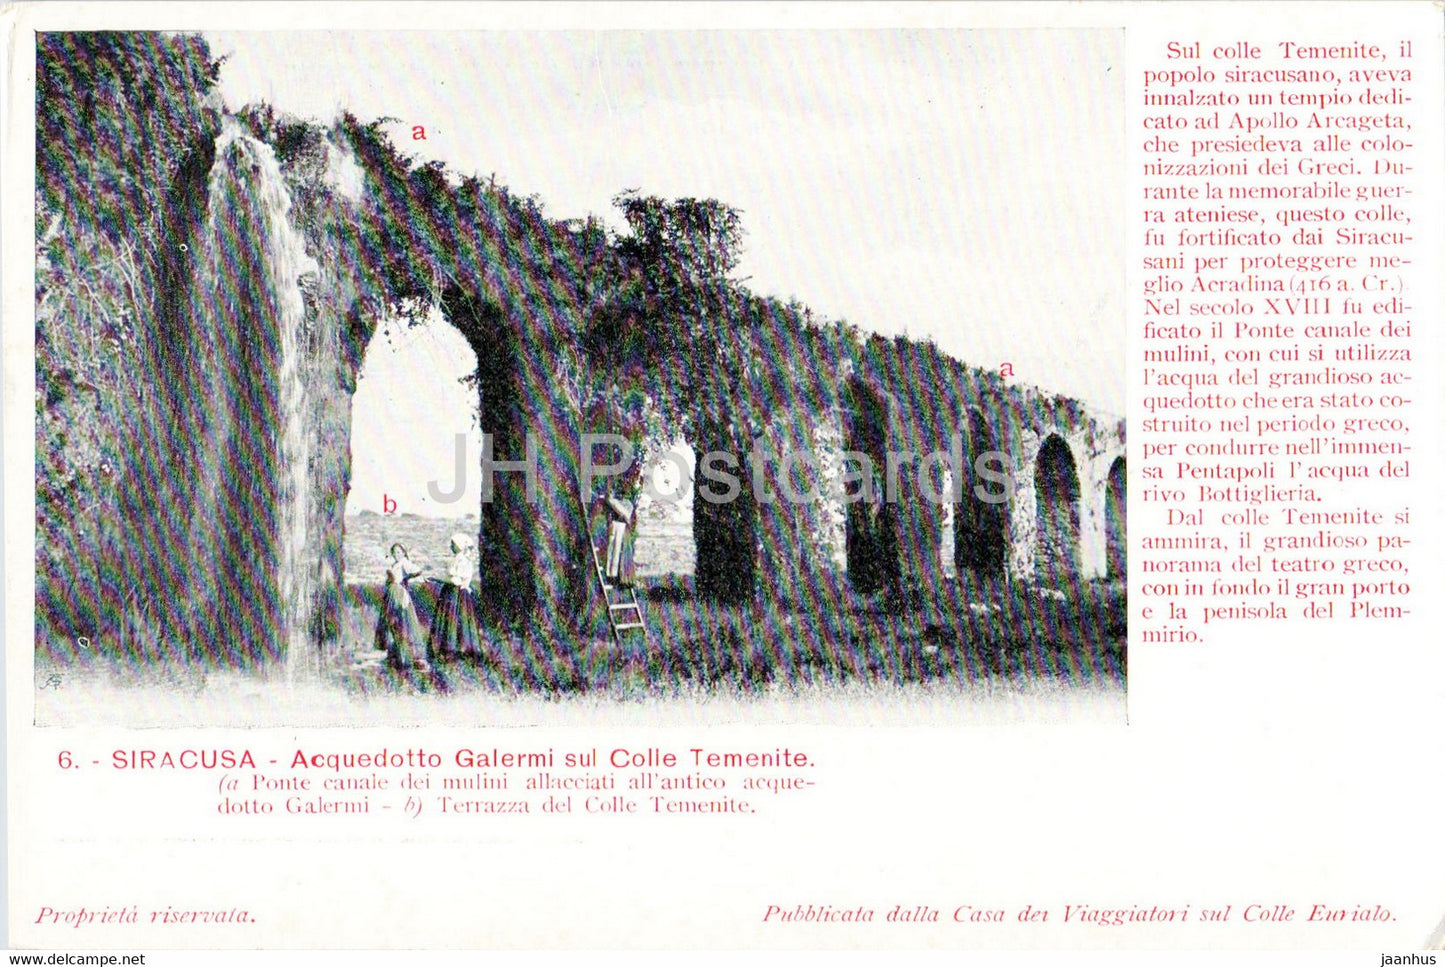 Siracusa - Acquedotto Galermi sur Colle Temenite - Galermi Aqueduct - 6 - ancient world - old postcard - Italy - unused - JH Postcards